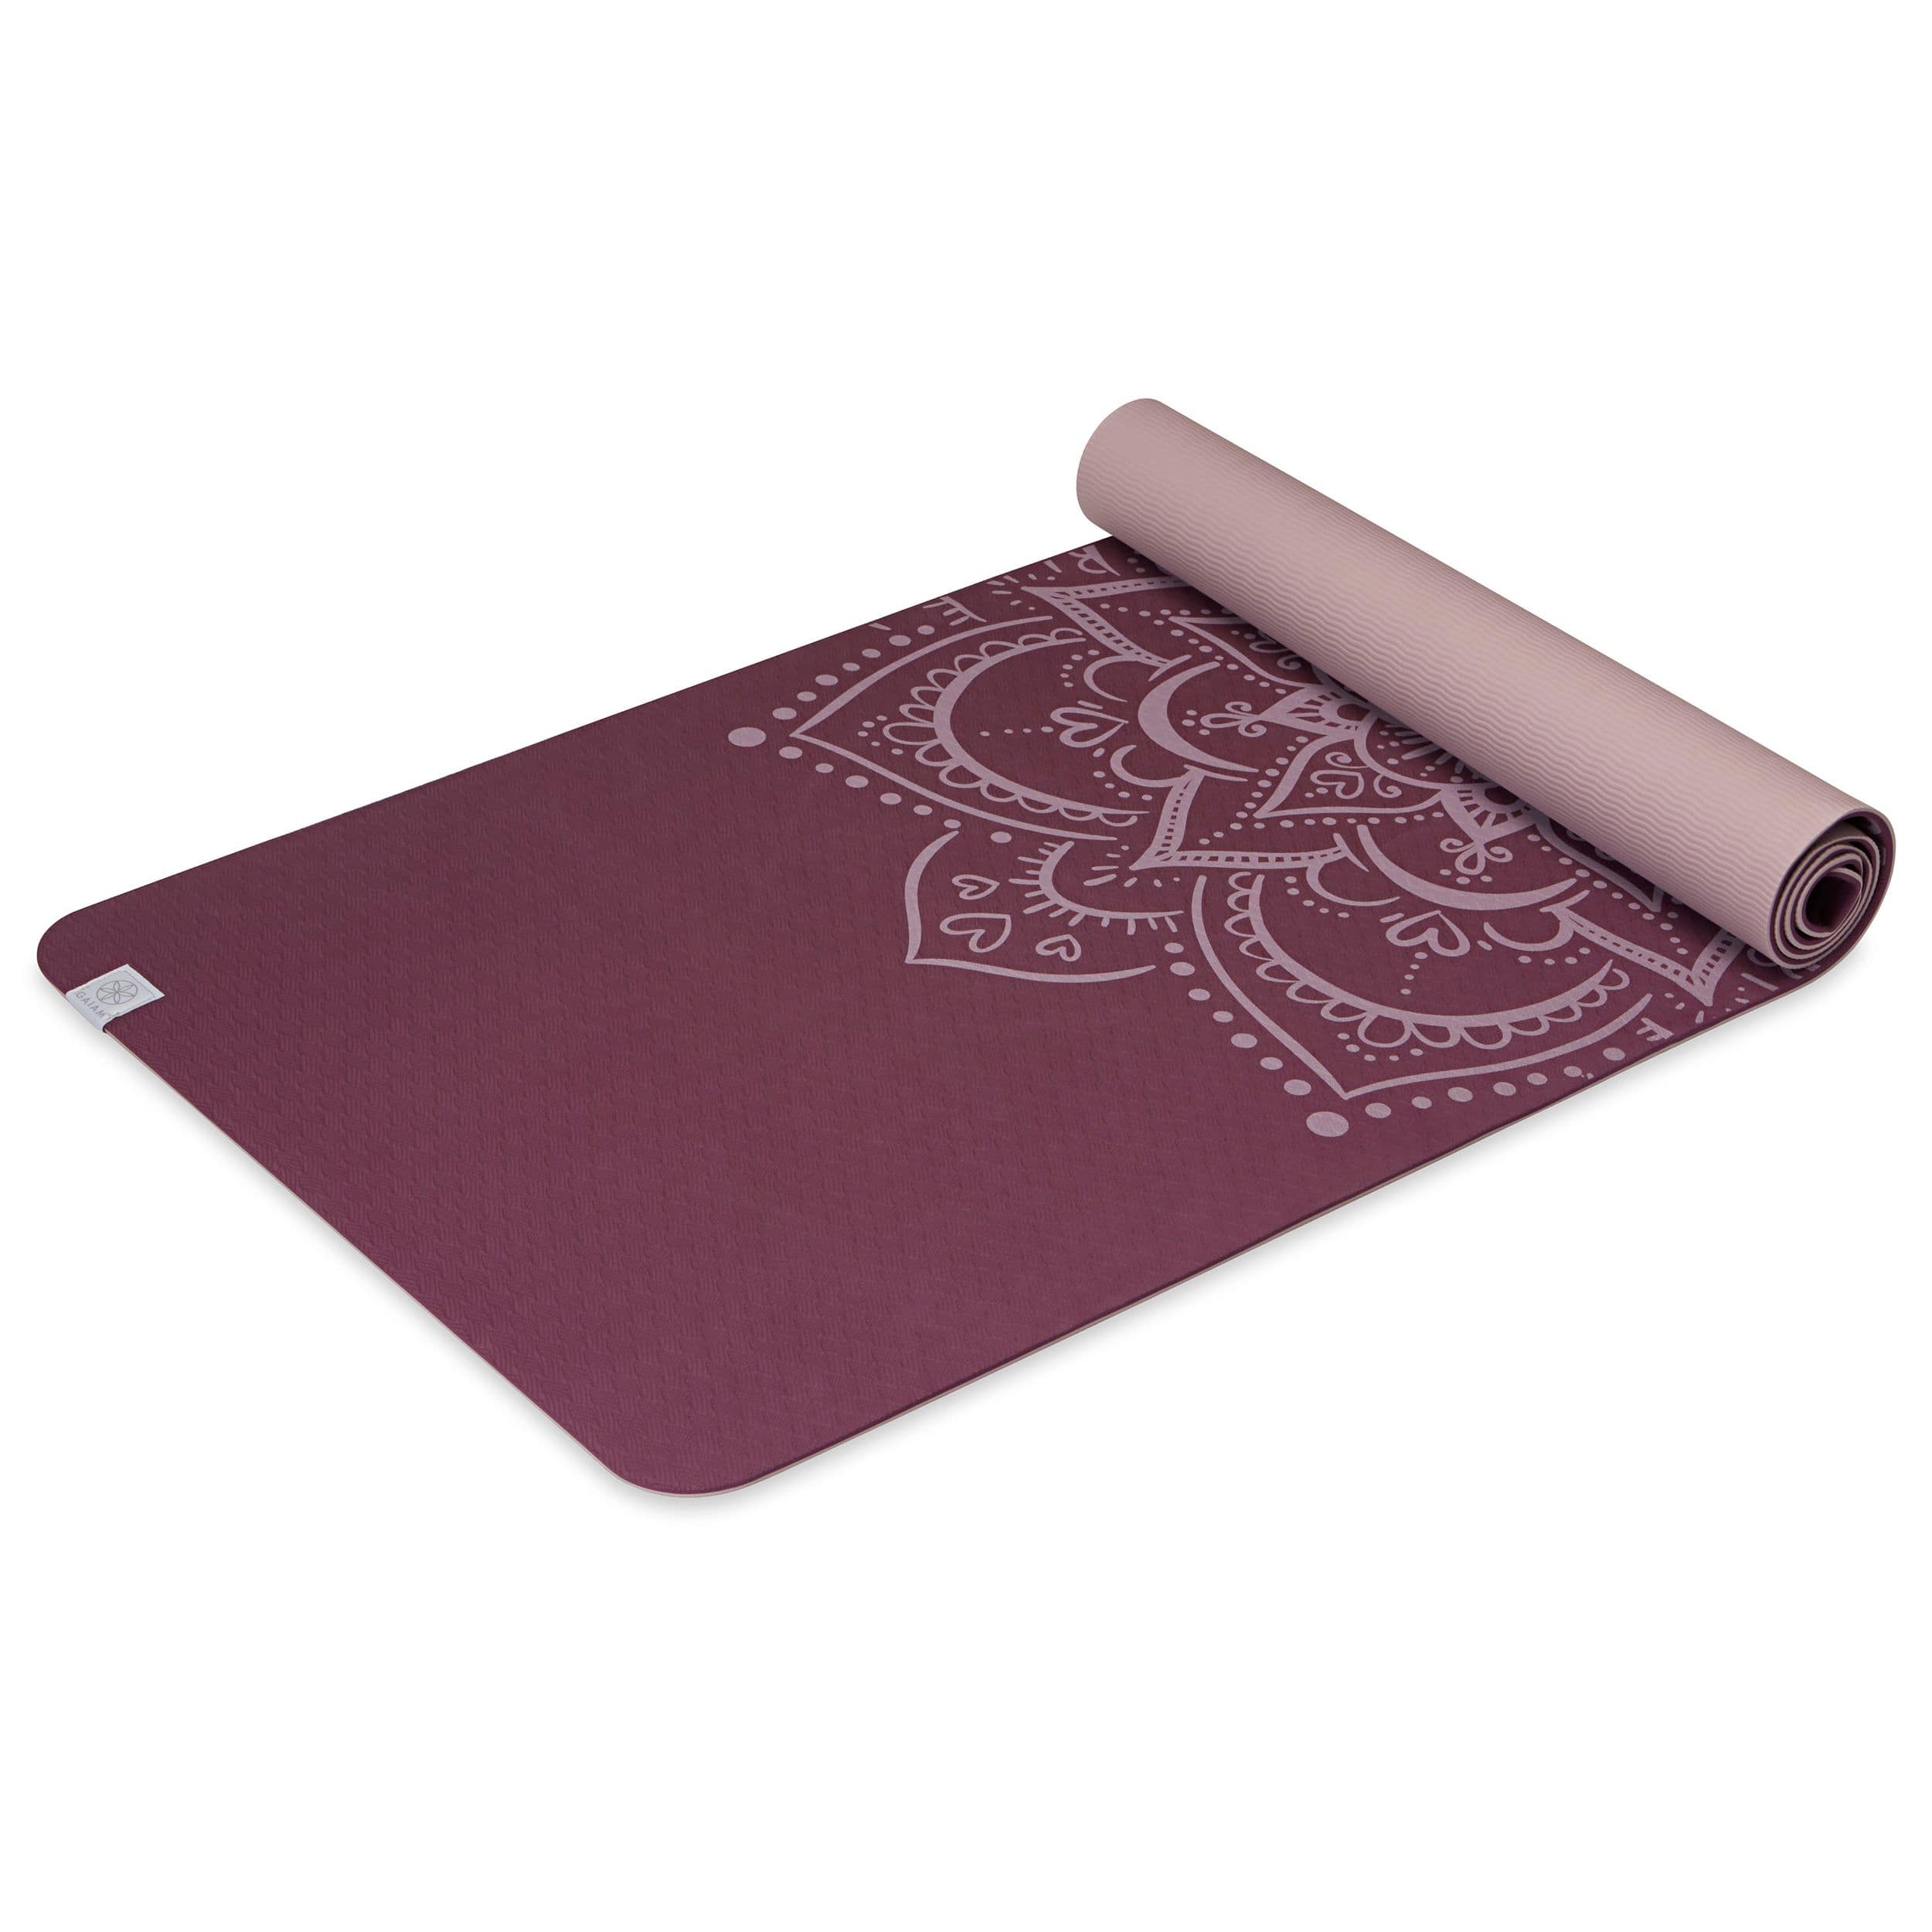 Gaiam Premium 2-Color Yoga Mats (6mm) — Act Earth Wise LLC